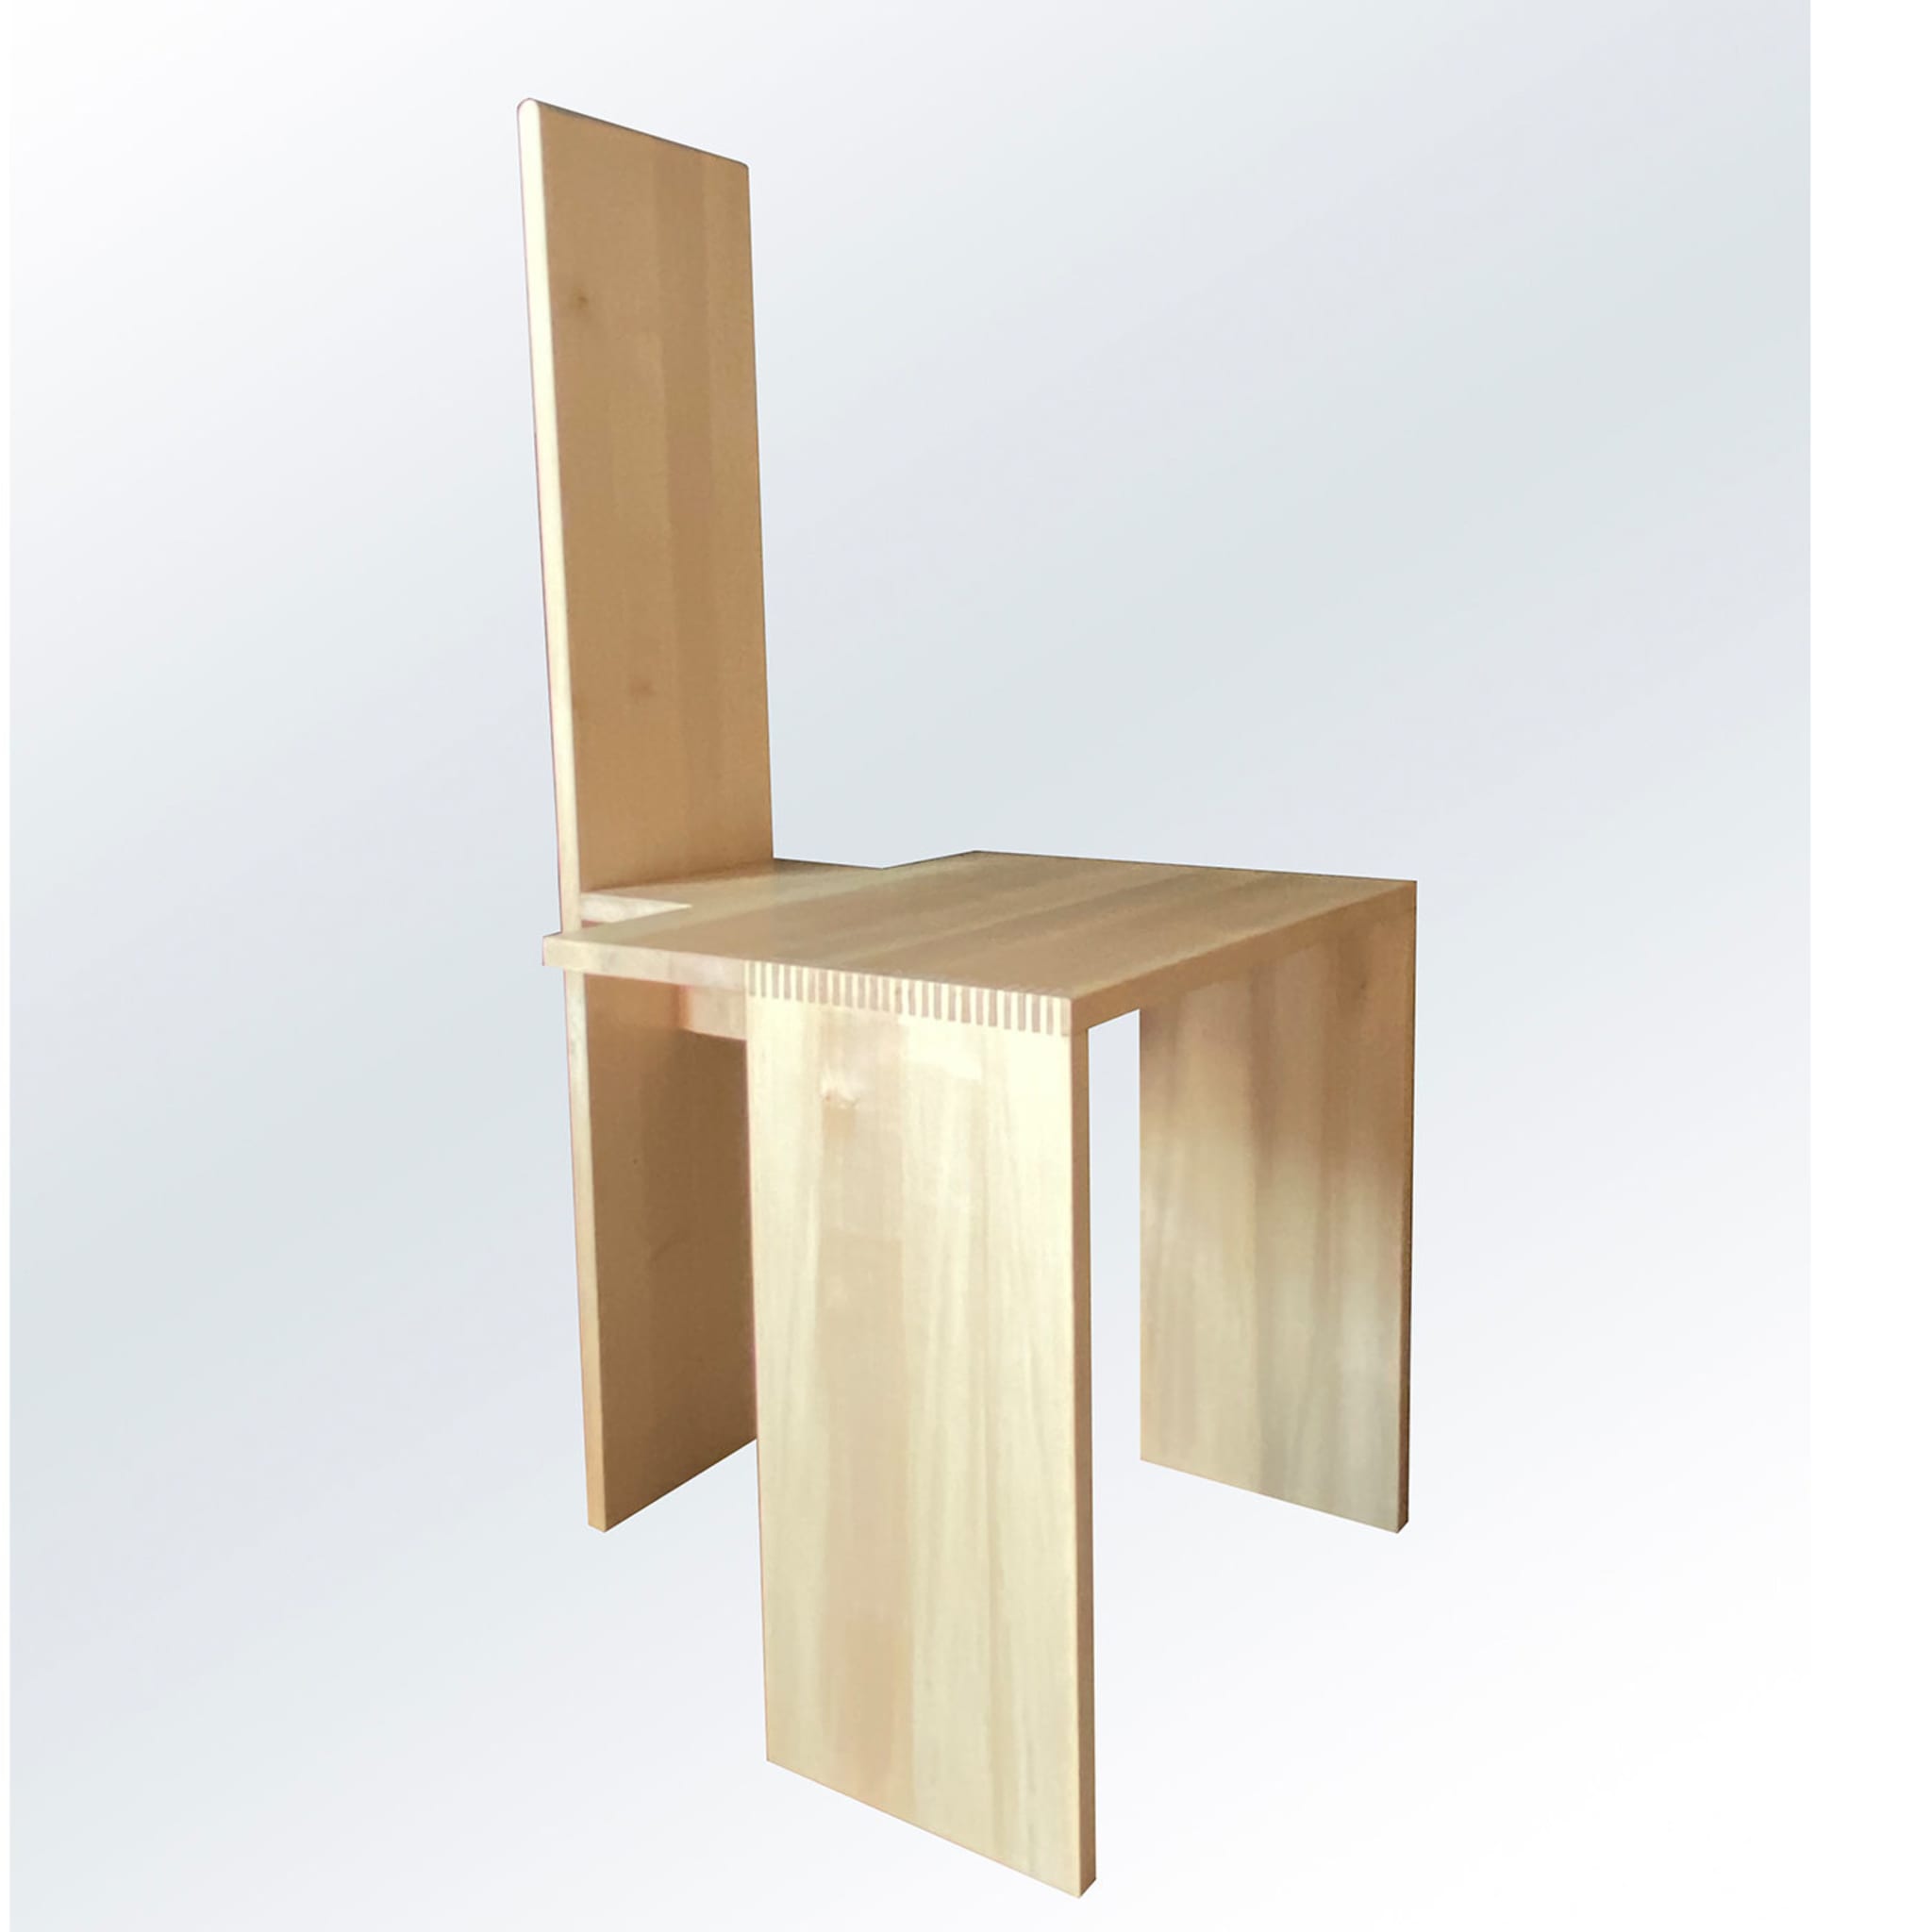 Cimabue White Maple Chair Limited Edition by Ferdinando Meccani - Alternative view 5